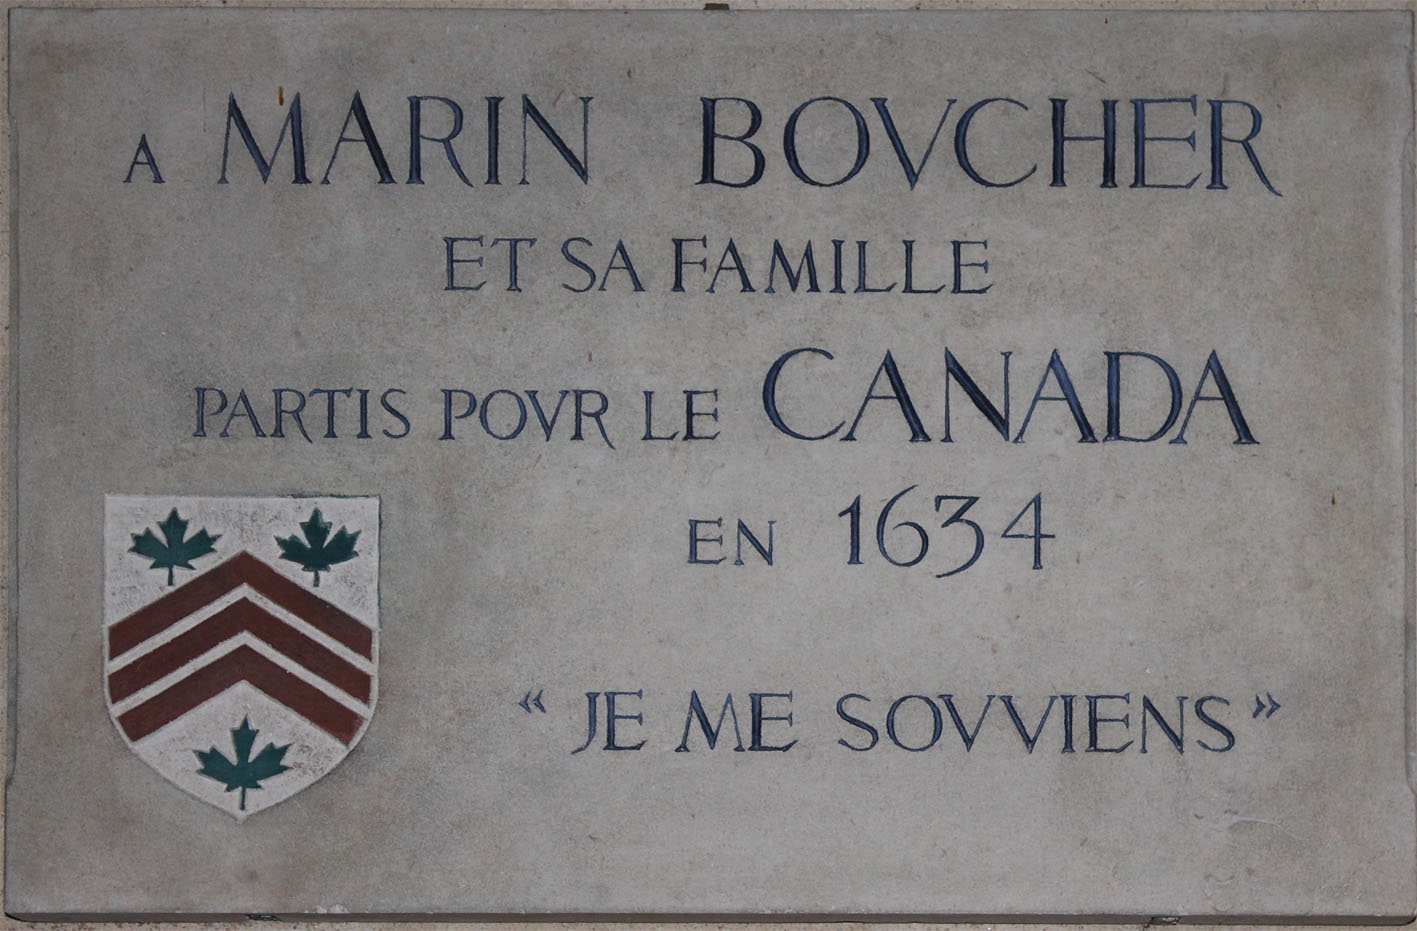 Commemorative plaque in Saint-Langis-les-Mortagne